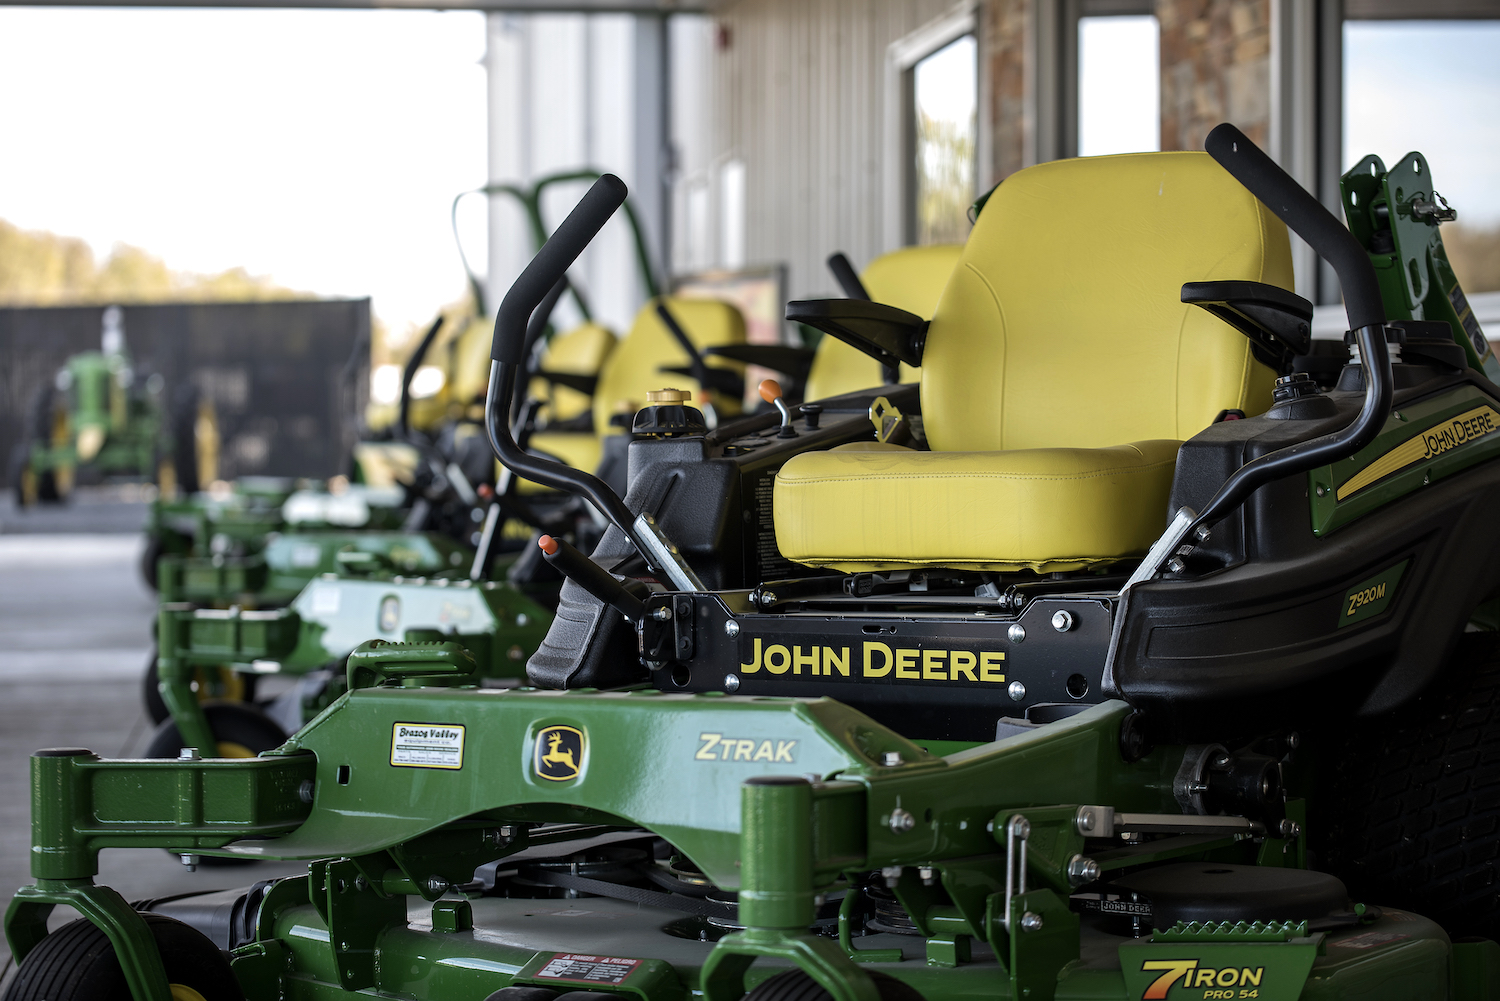 A zero-turn John Deere lawn mower, a zero-turn lawn mower is the best type of mower for large yards